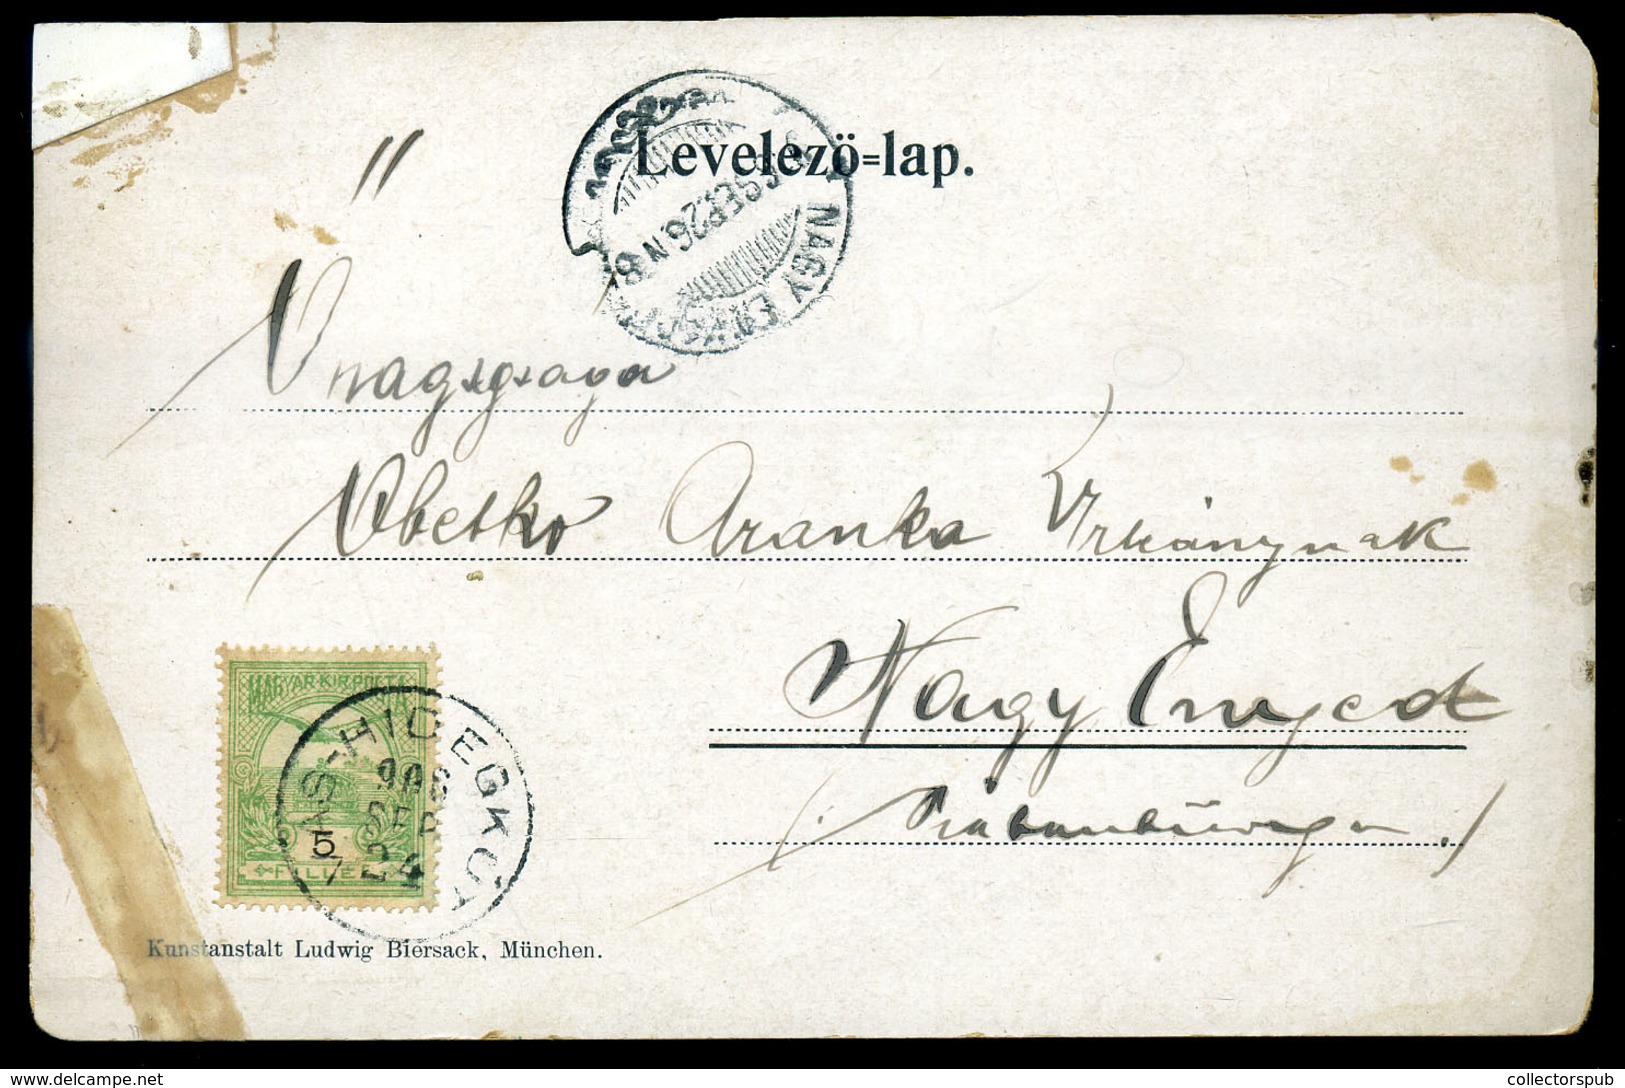 KÁROLYFA / Korovci 1906. Régi Képeslap  /  Vintage Pic. P.card - Hongarije